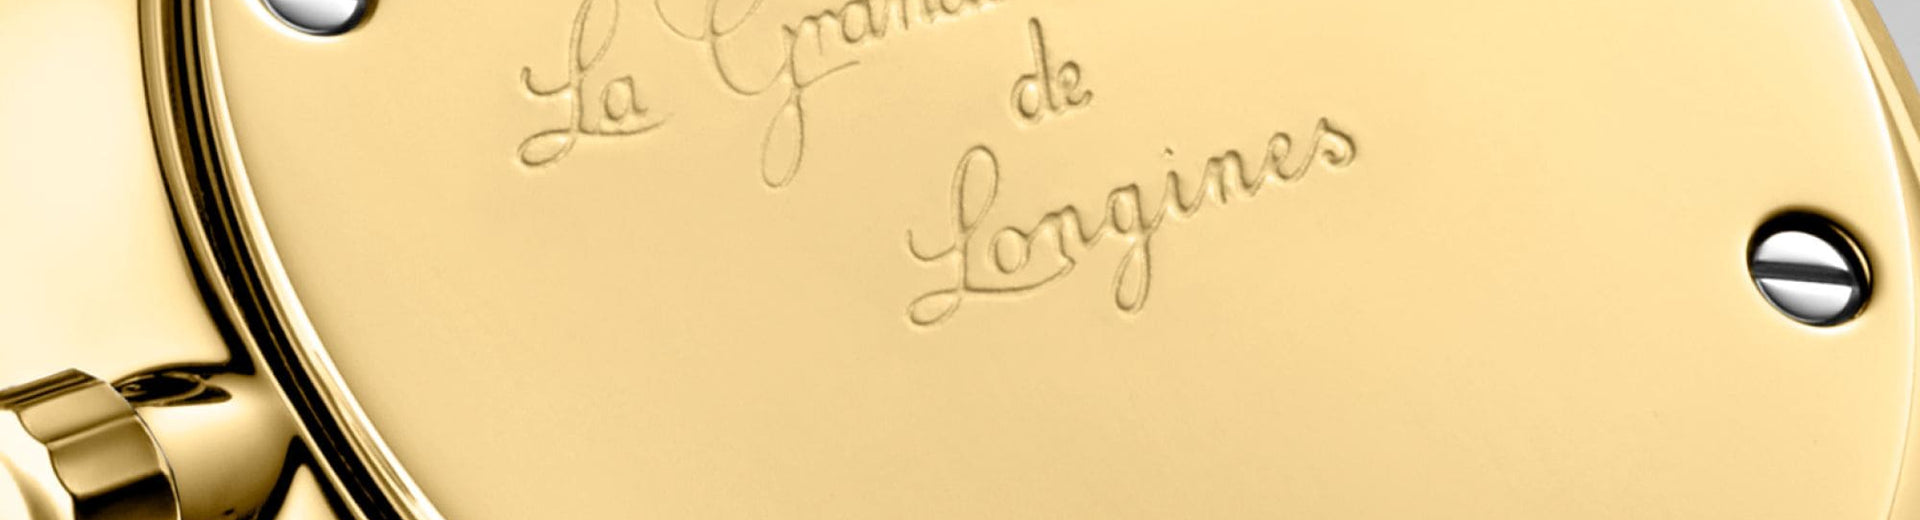 La Grande Classique De Longines Watch L42092878